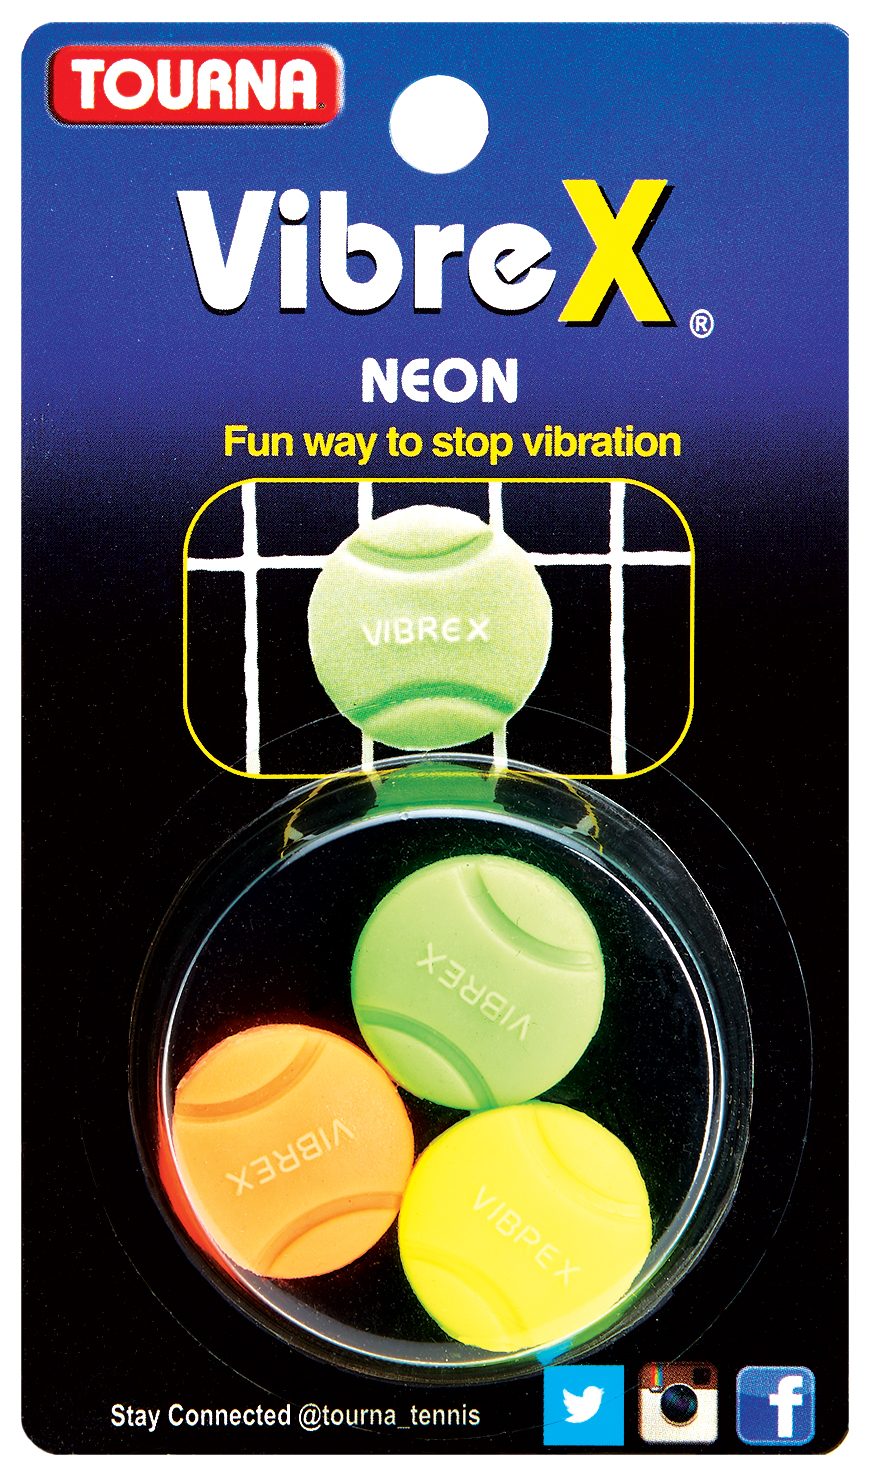 Tourna VibreX Neon Vibration Dampeners